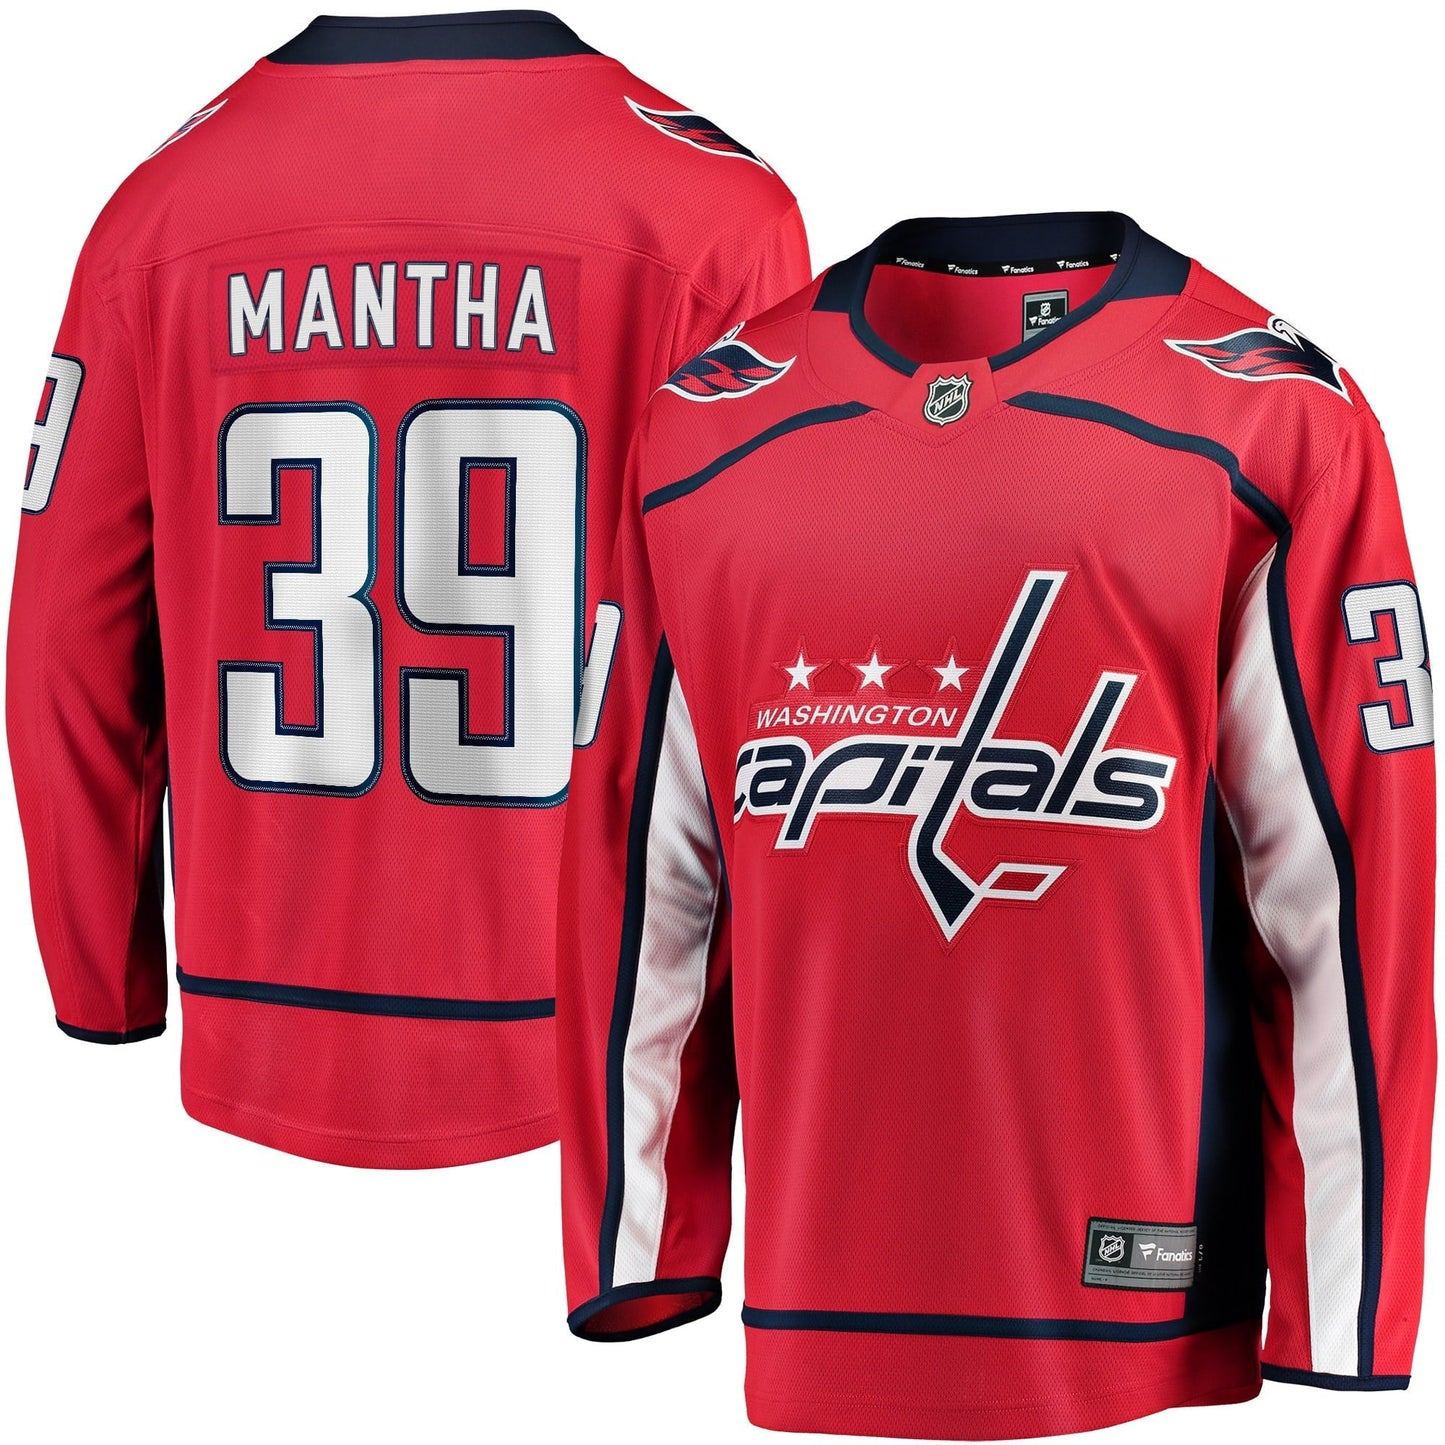 Men's Fanatics Branded Anthony Mantha Red Washington Capitals 2017/18 Home Breakaway Replica Jersey